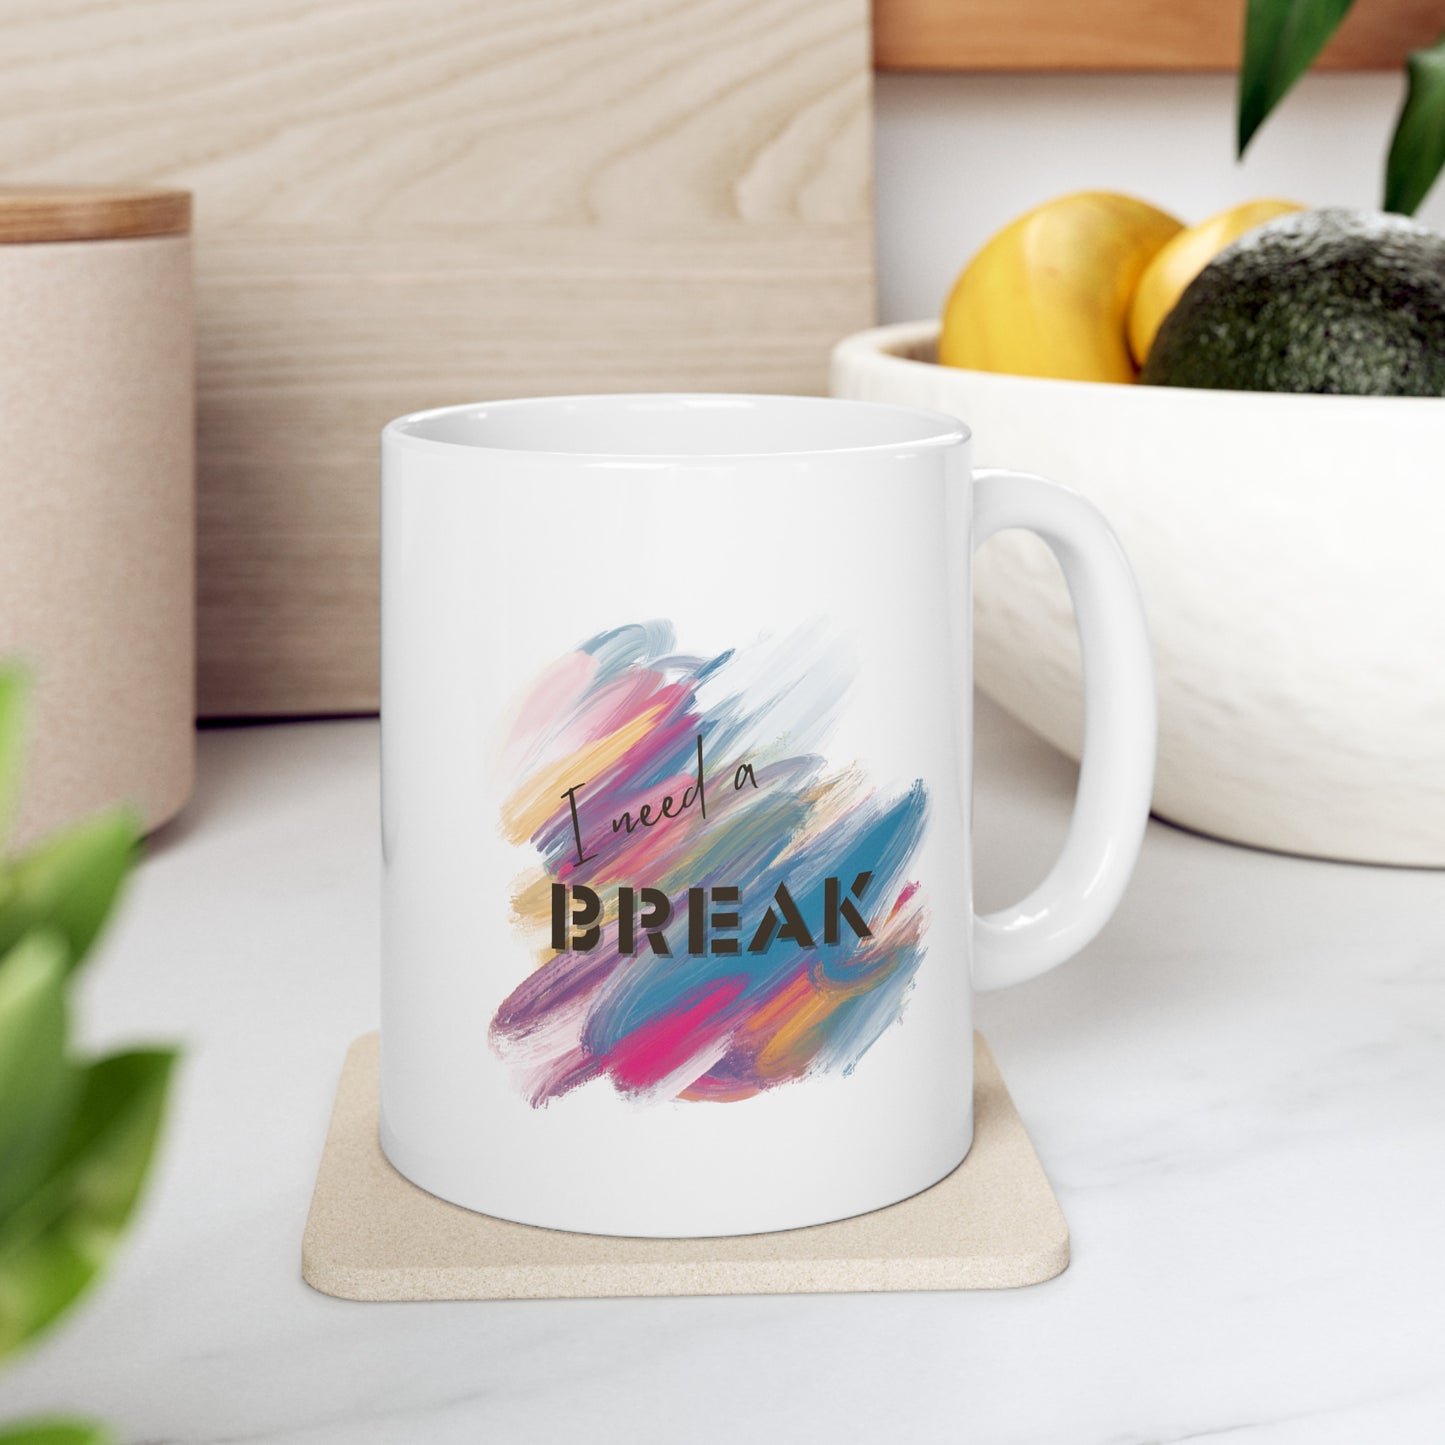 Mug - I Need A Break